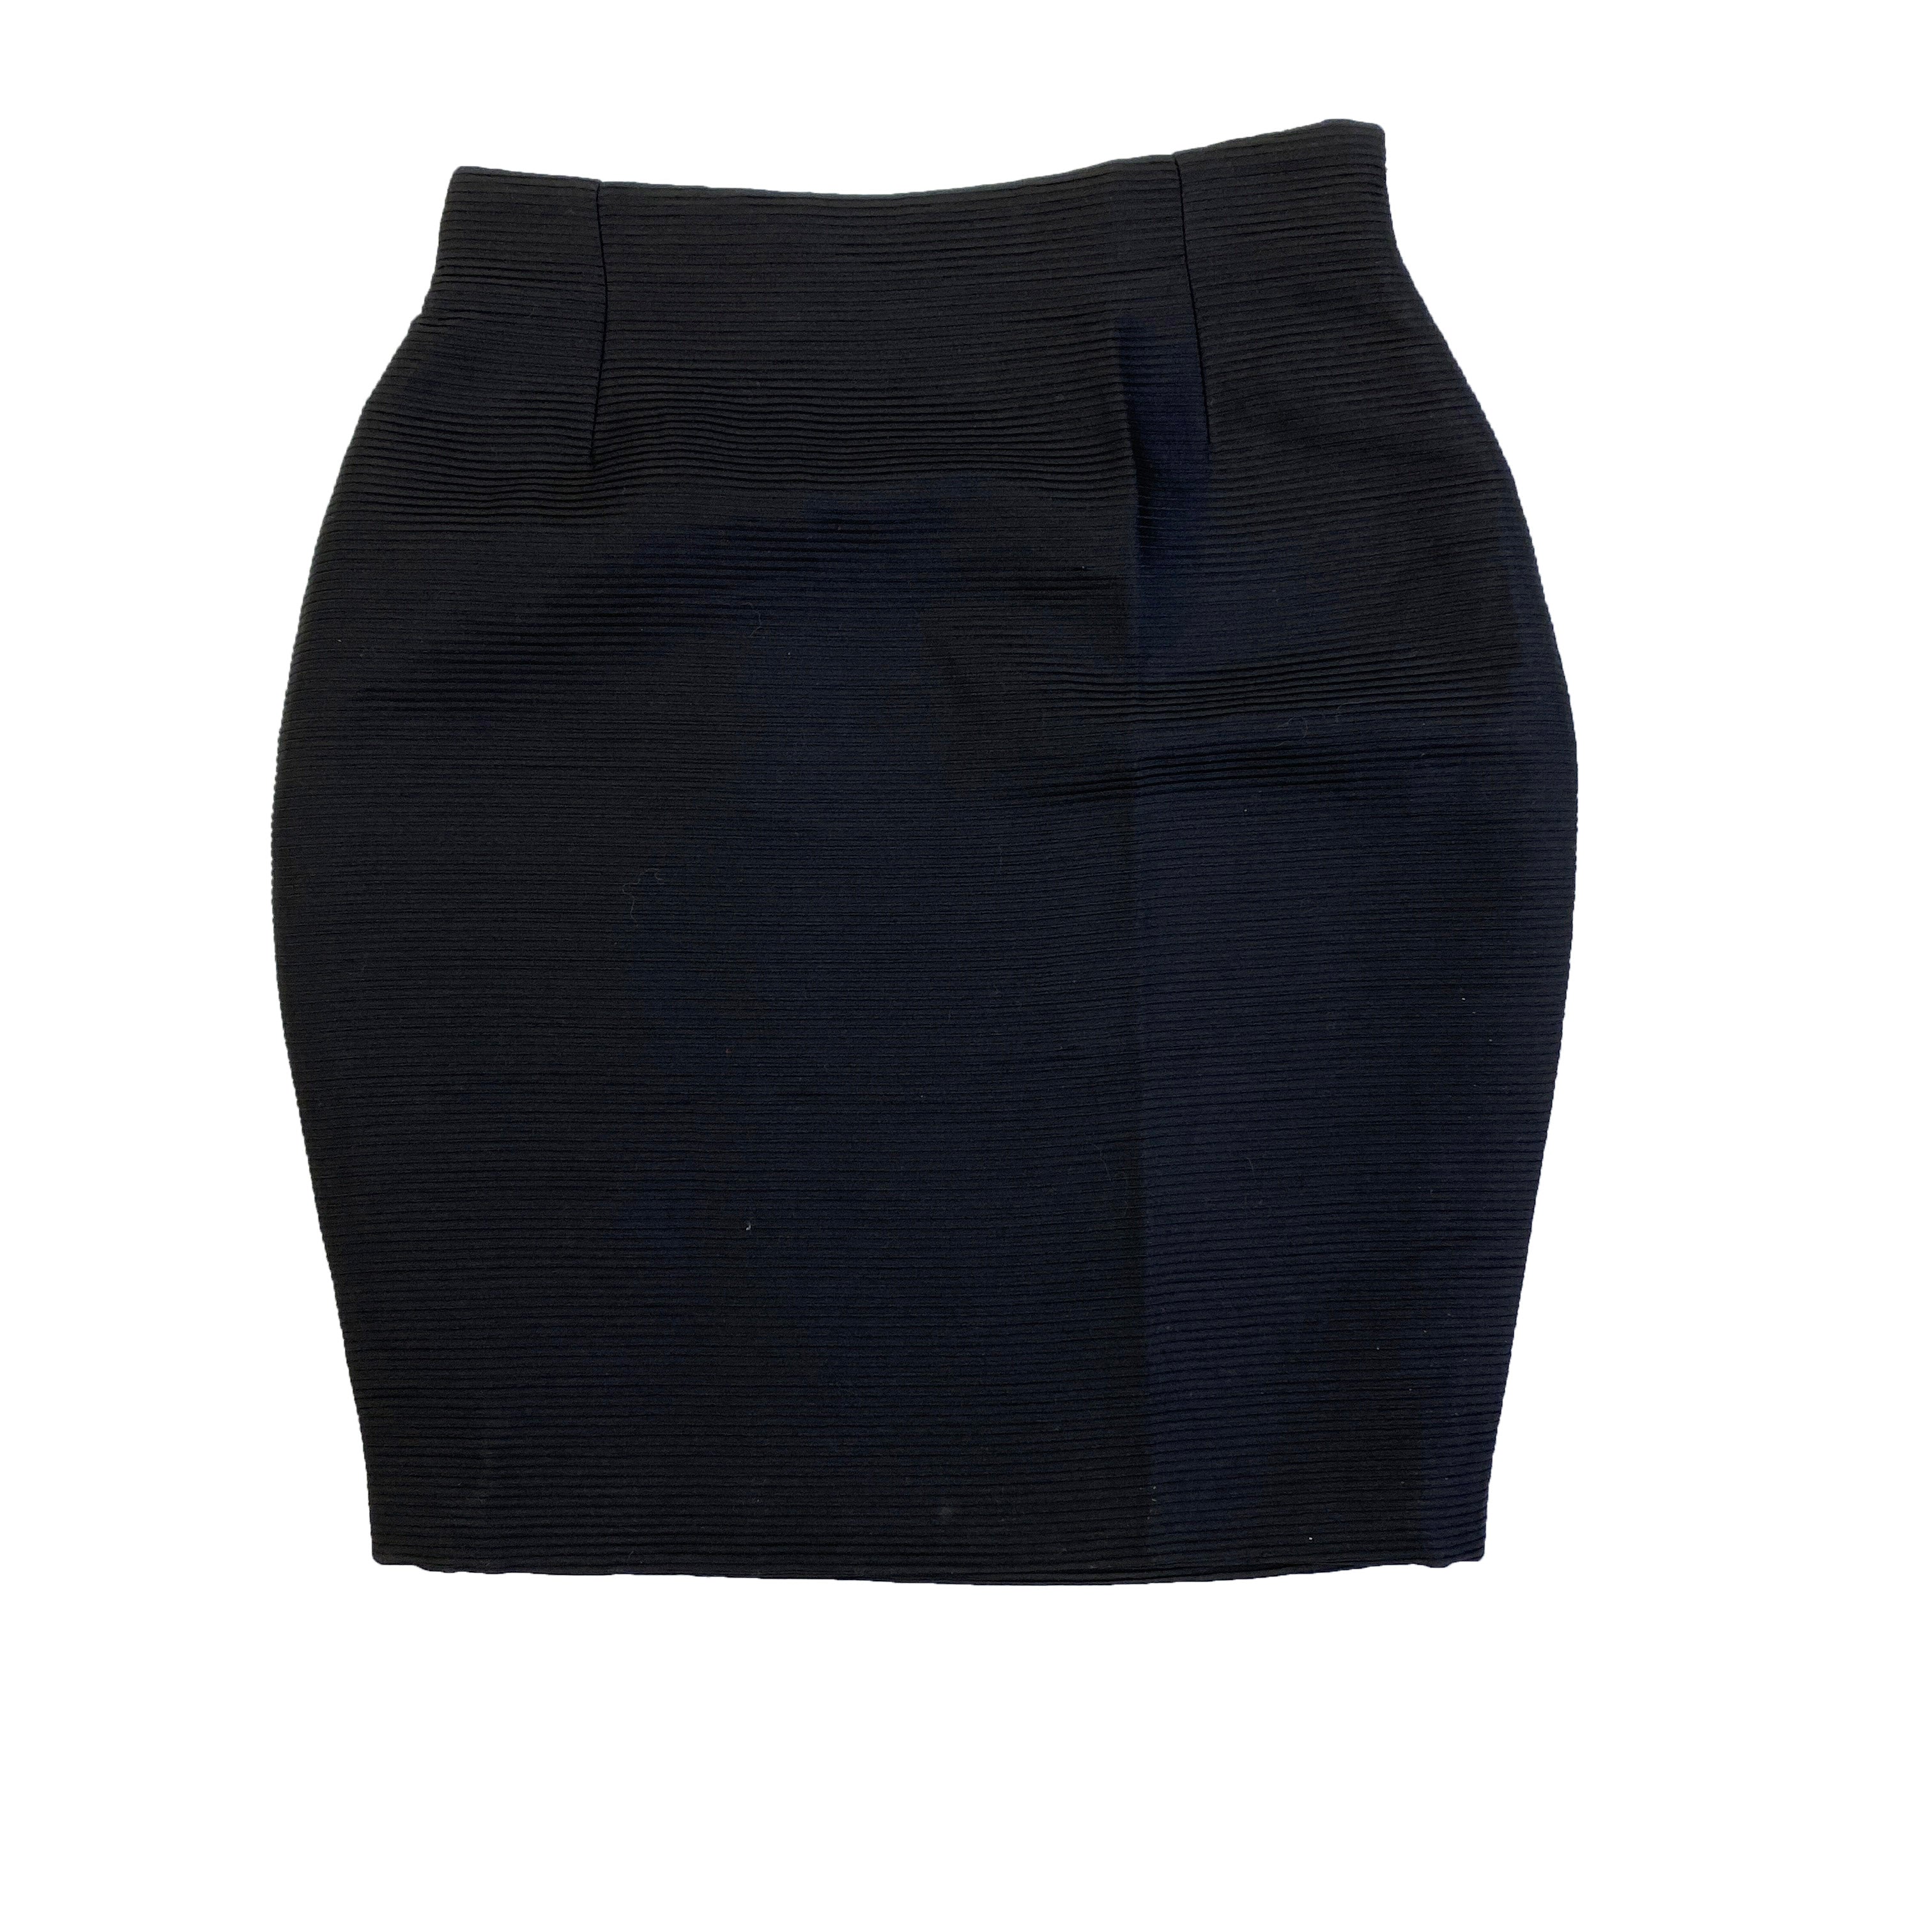 Gianni Versace Pleated Black Skirt